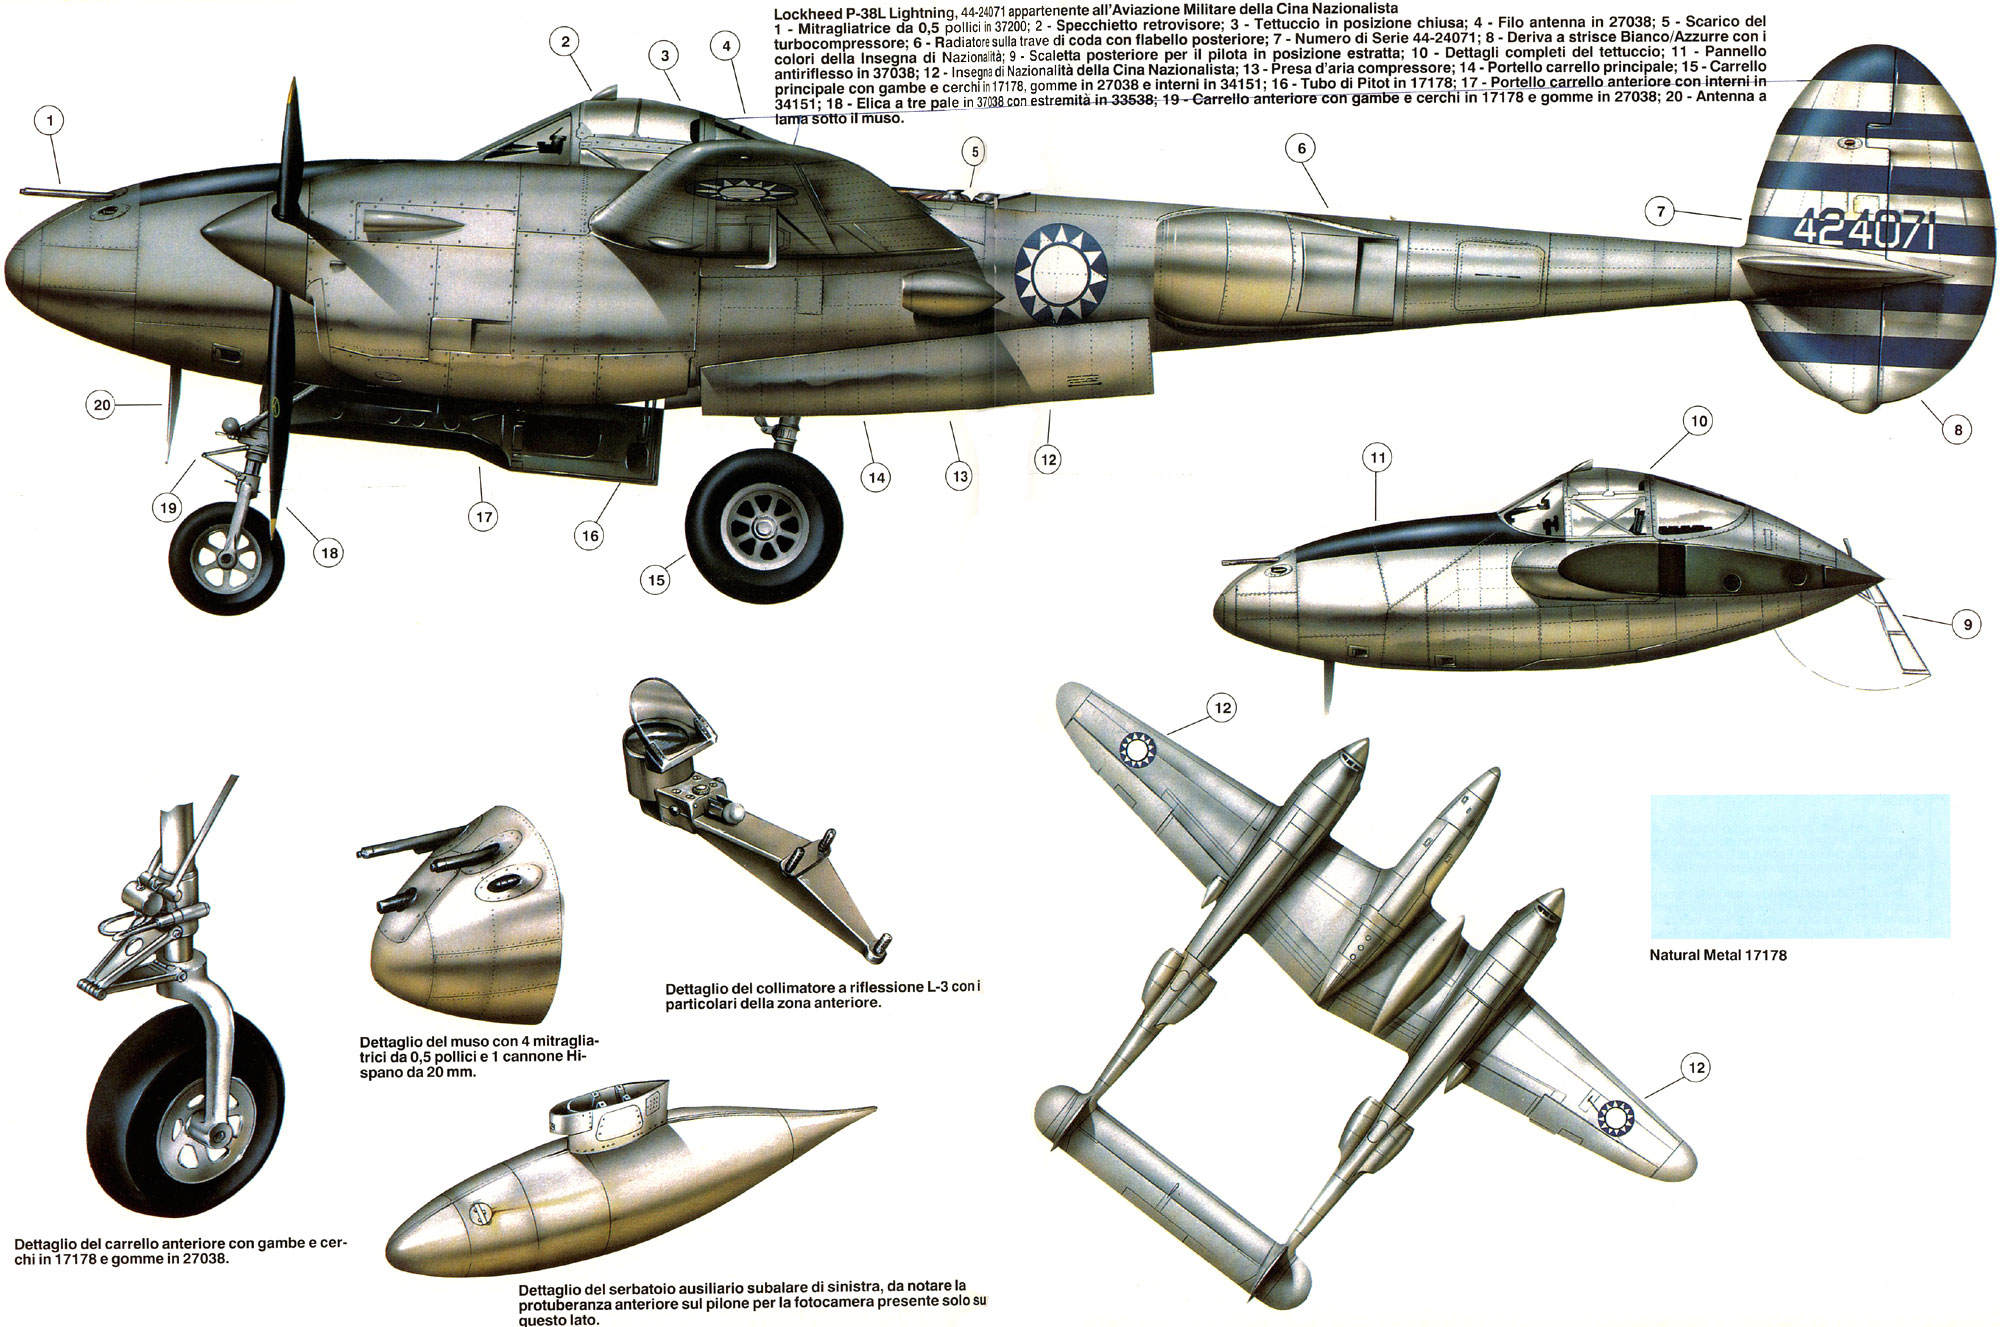 Lockheed P-38 Lightning #7